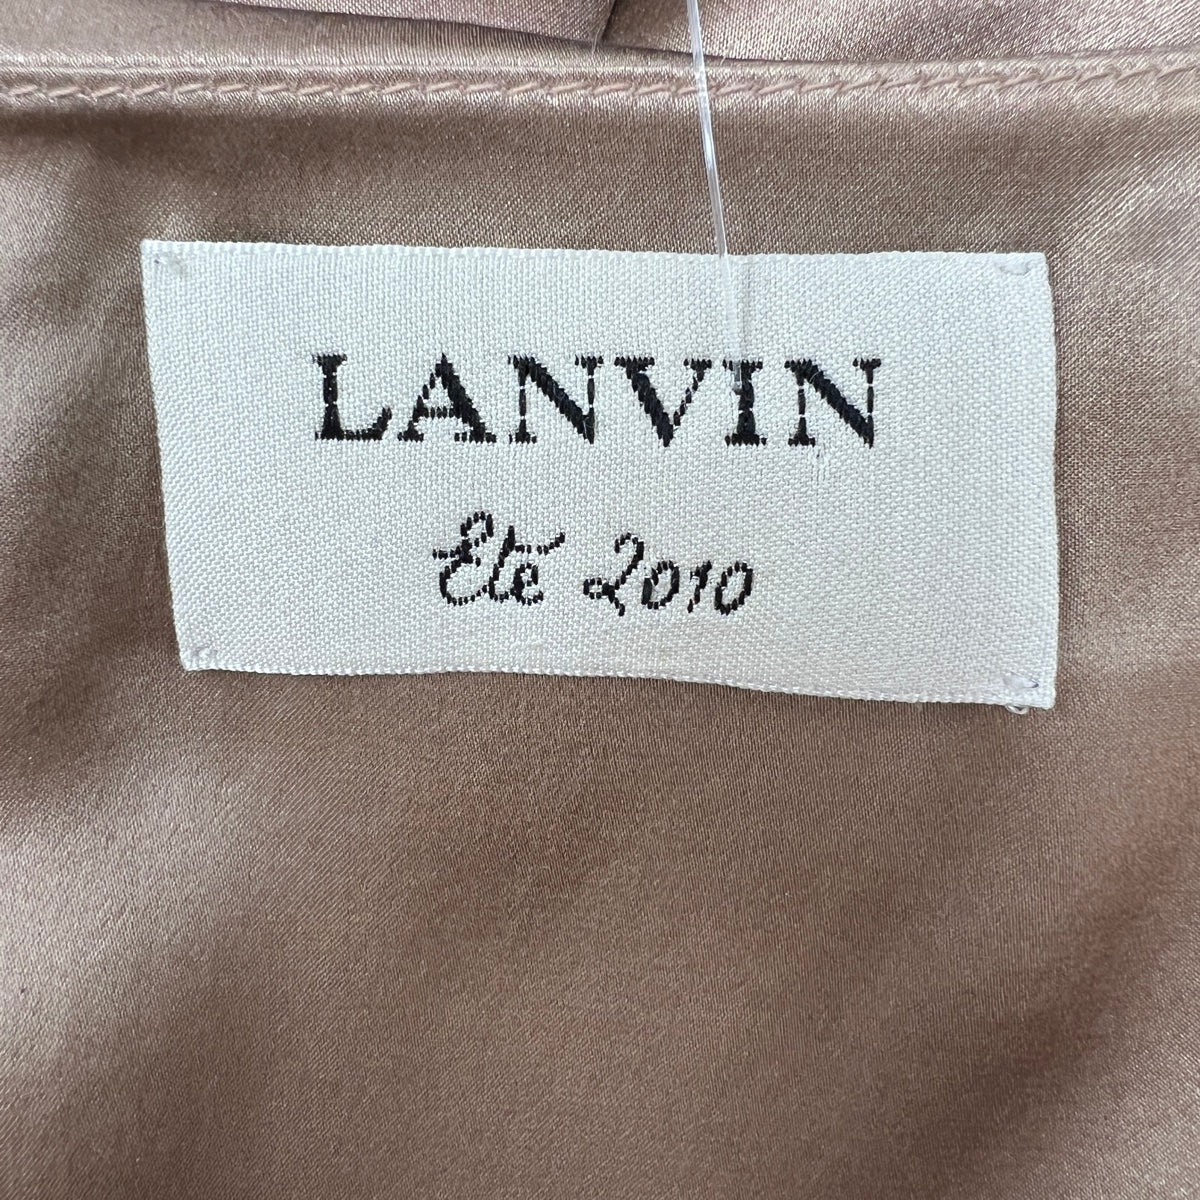 Lanvin Dress